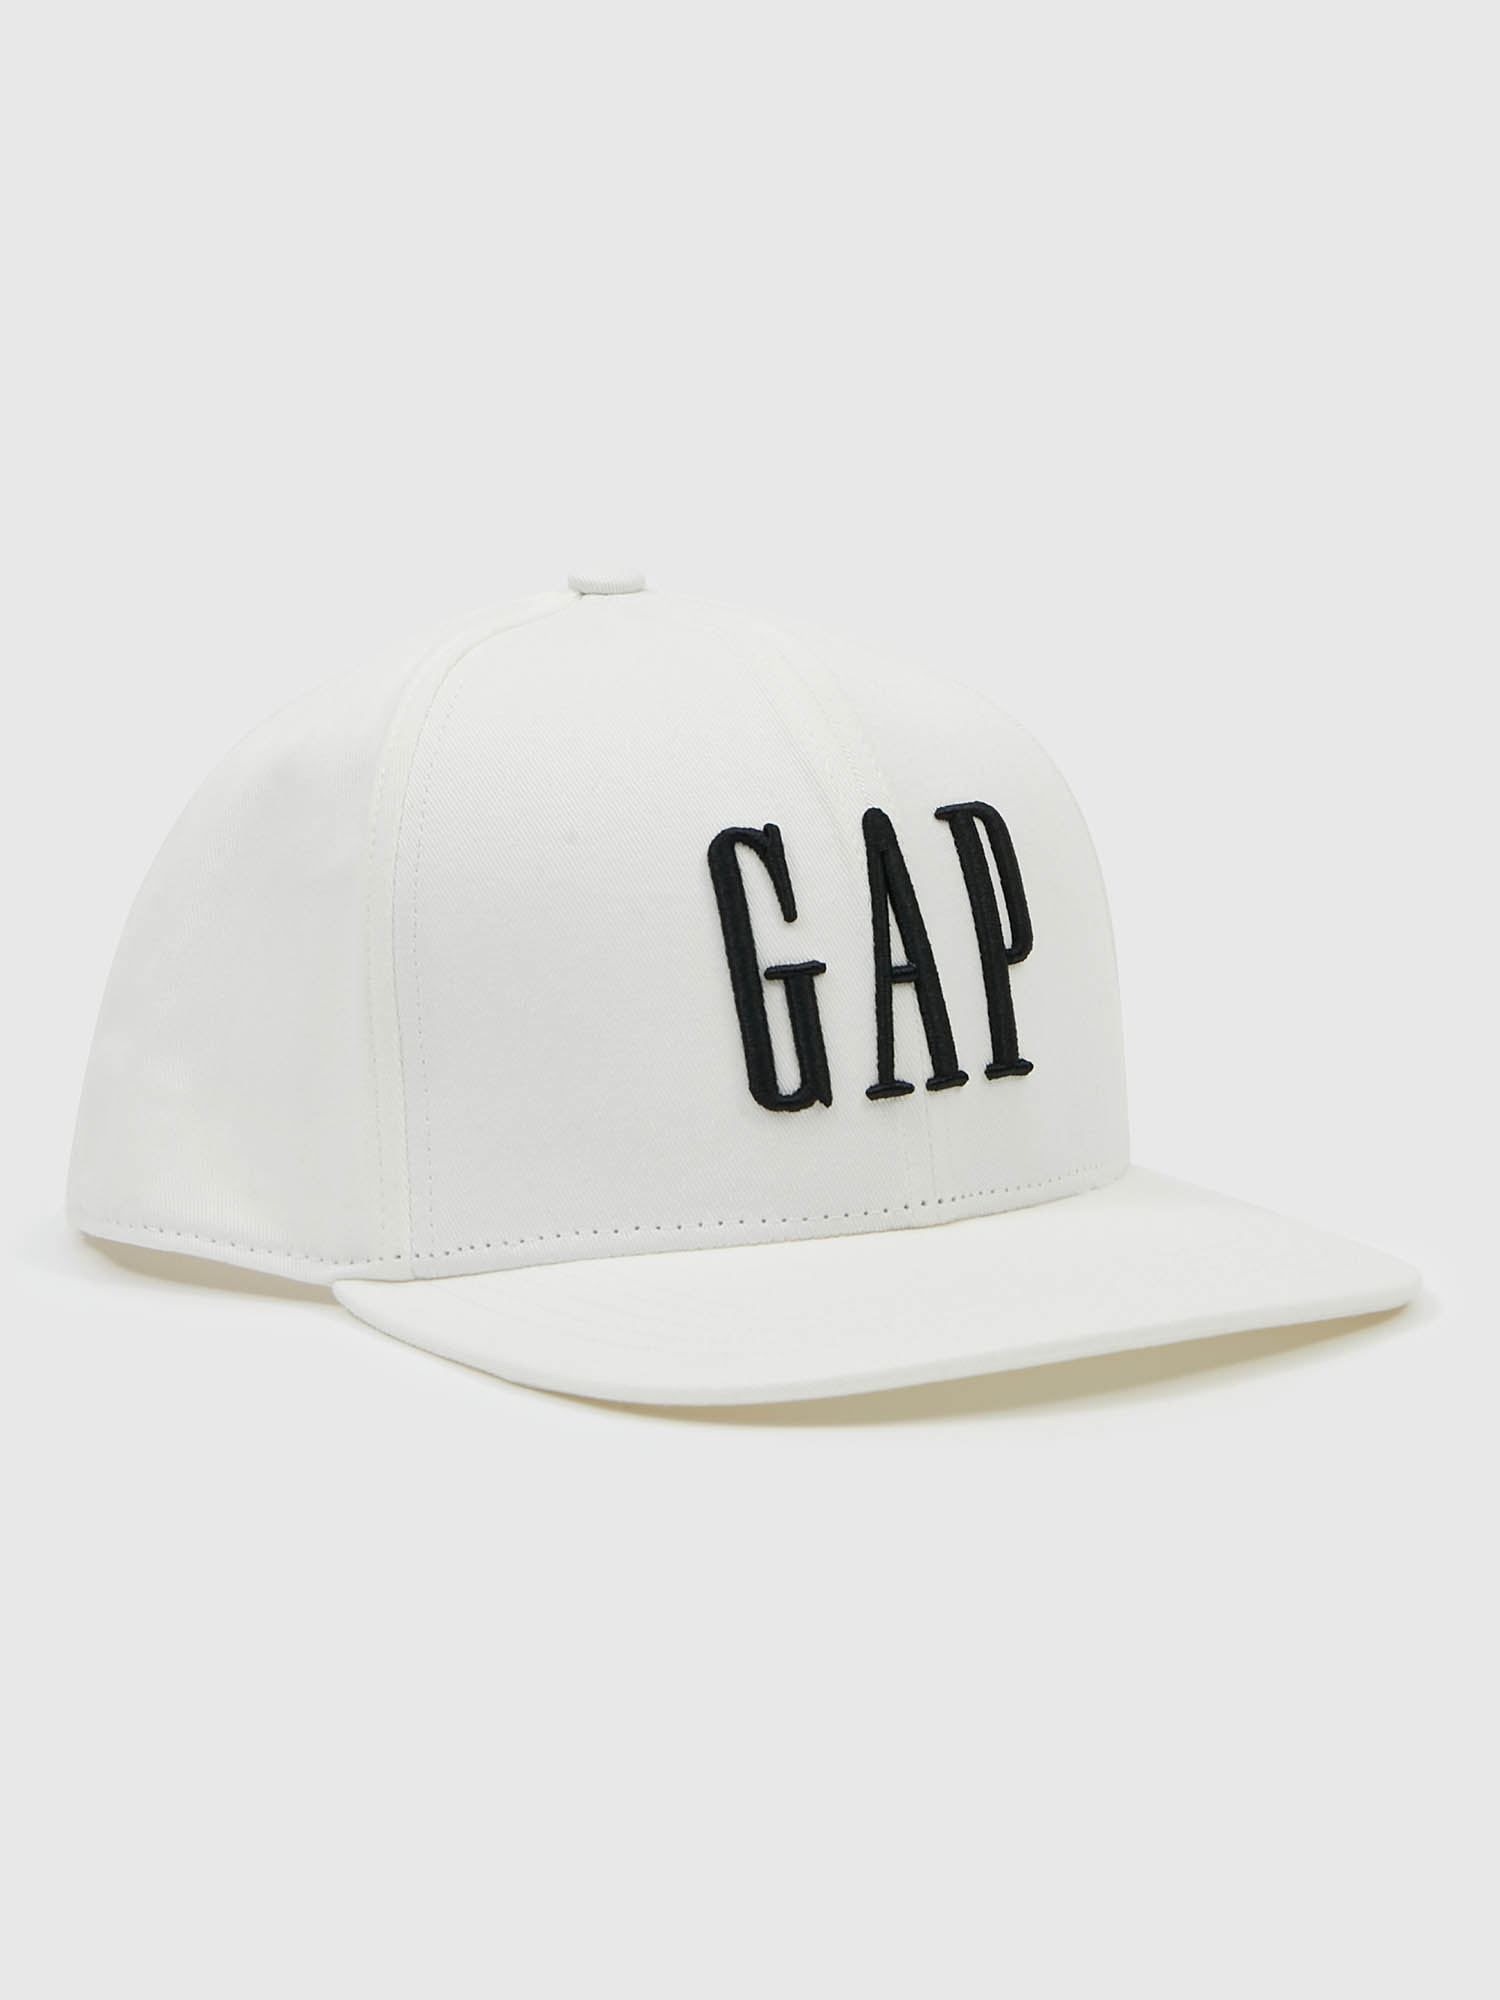 GAP Cap with logo - Men